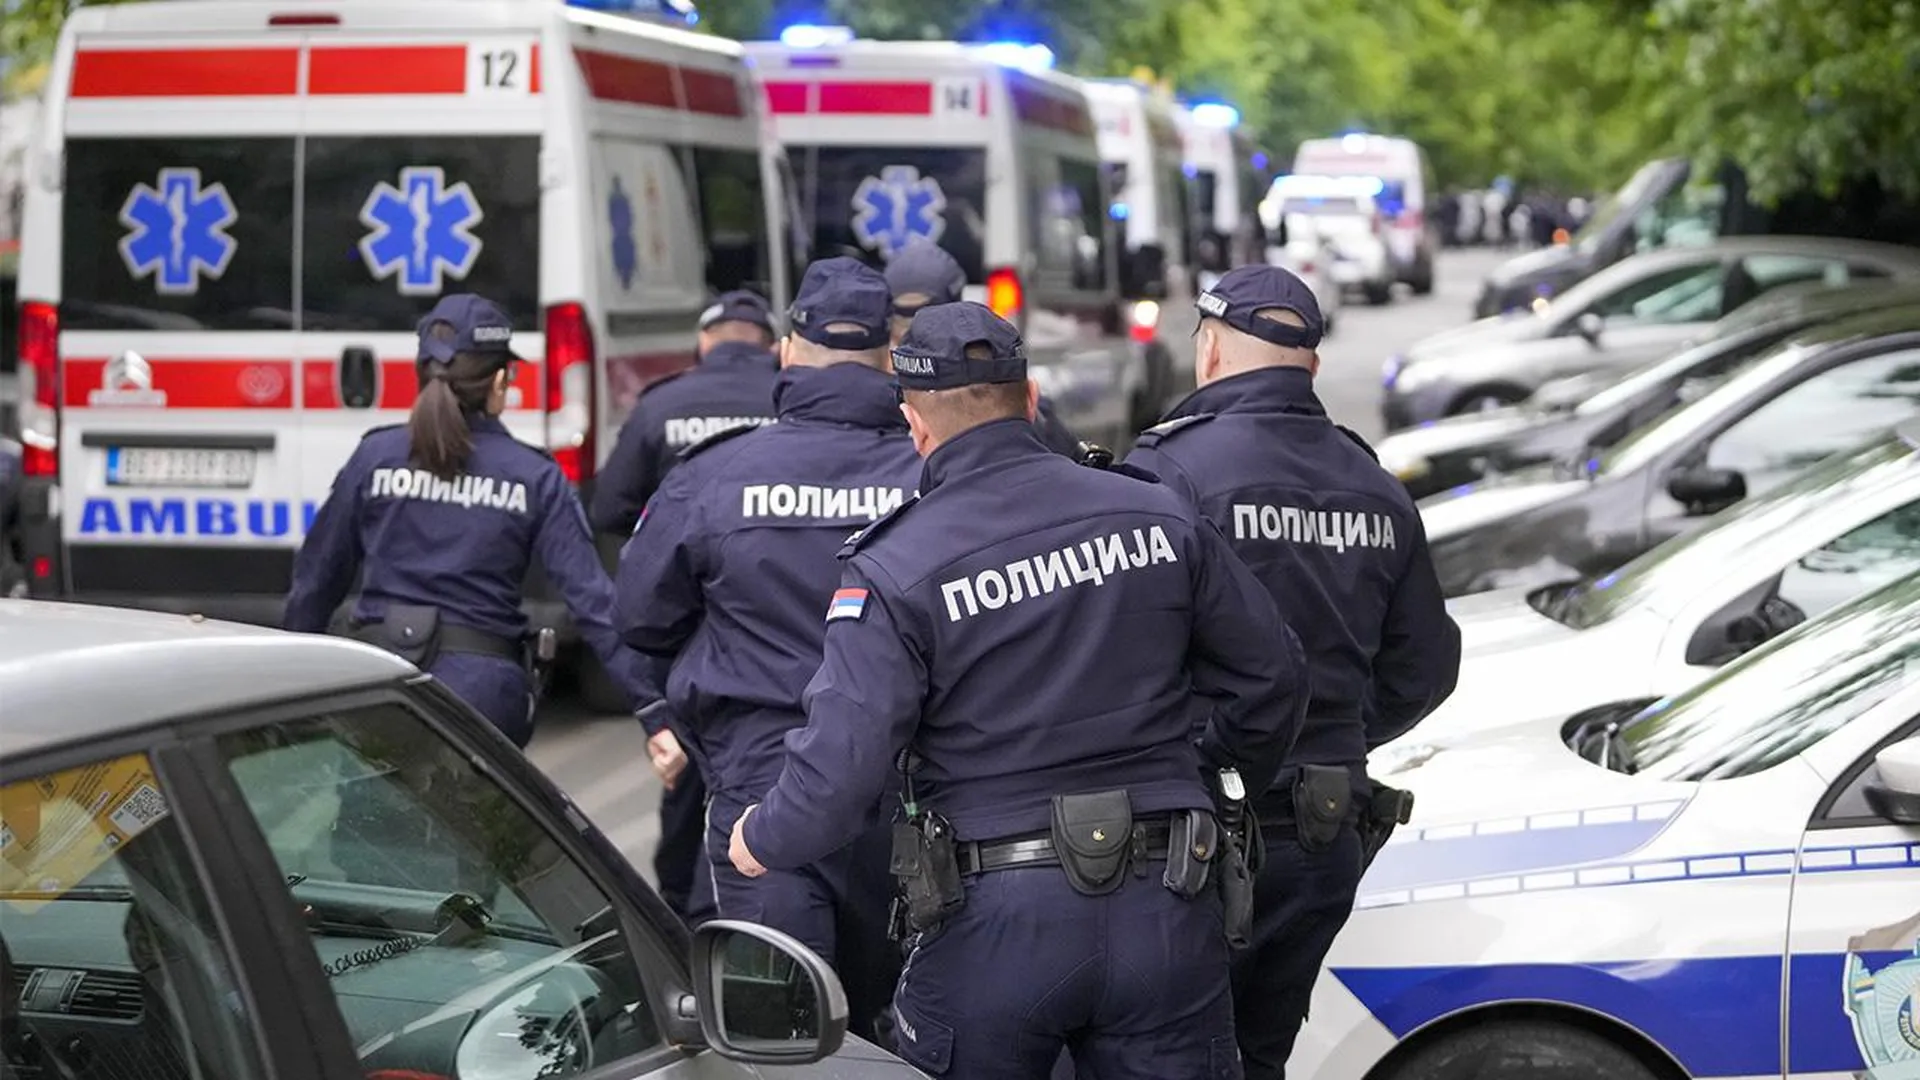 Теракт в сербии май. Сербская полиция. Милиция Сербии. Форма сербской полиции. Форма полиции Сербии.